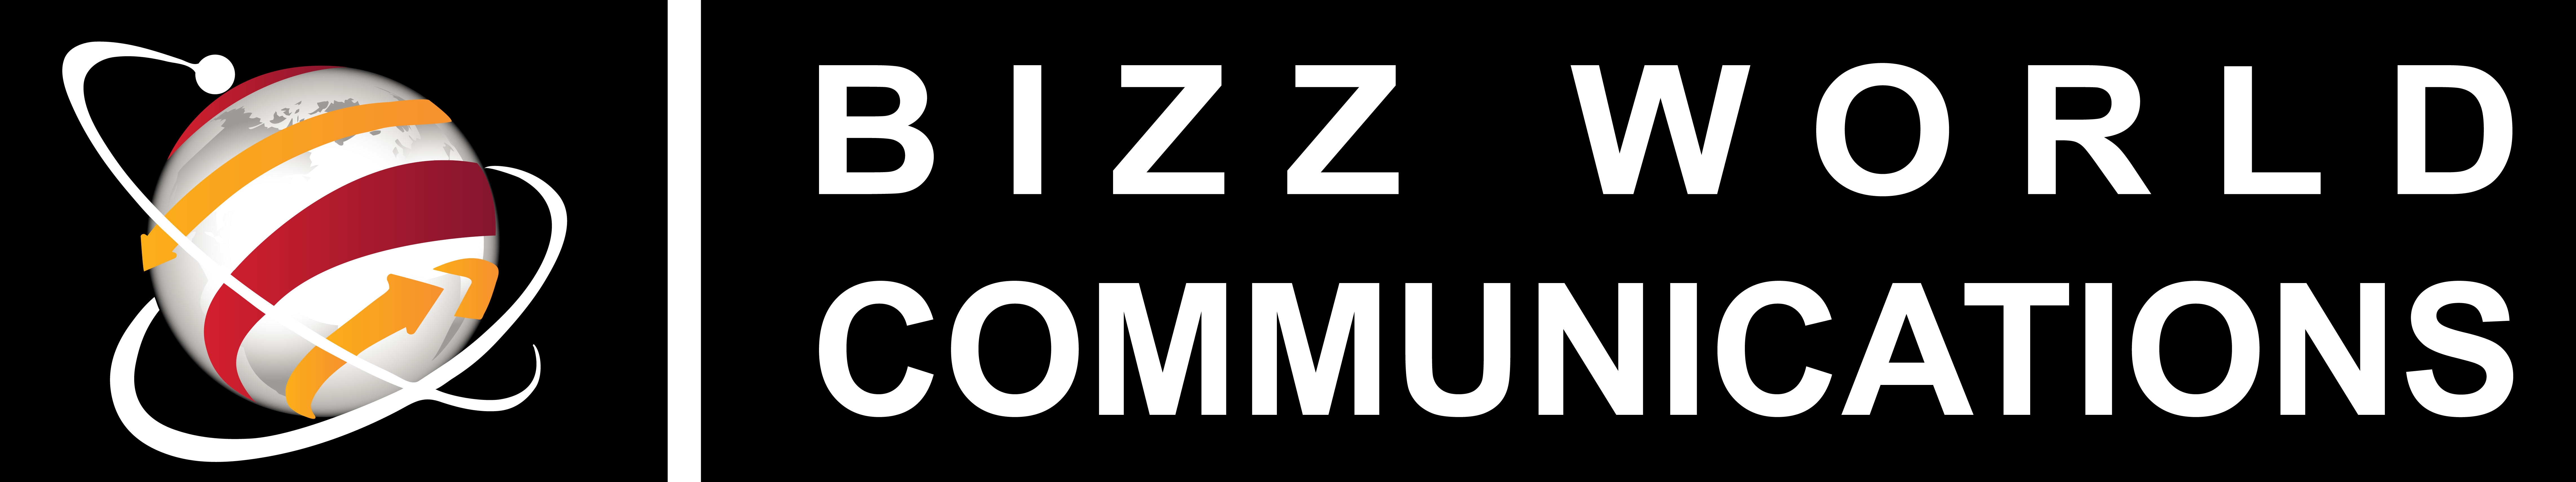 Bizz World Communications のプロファイルバナー